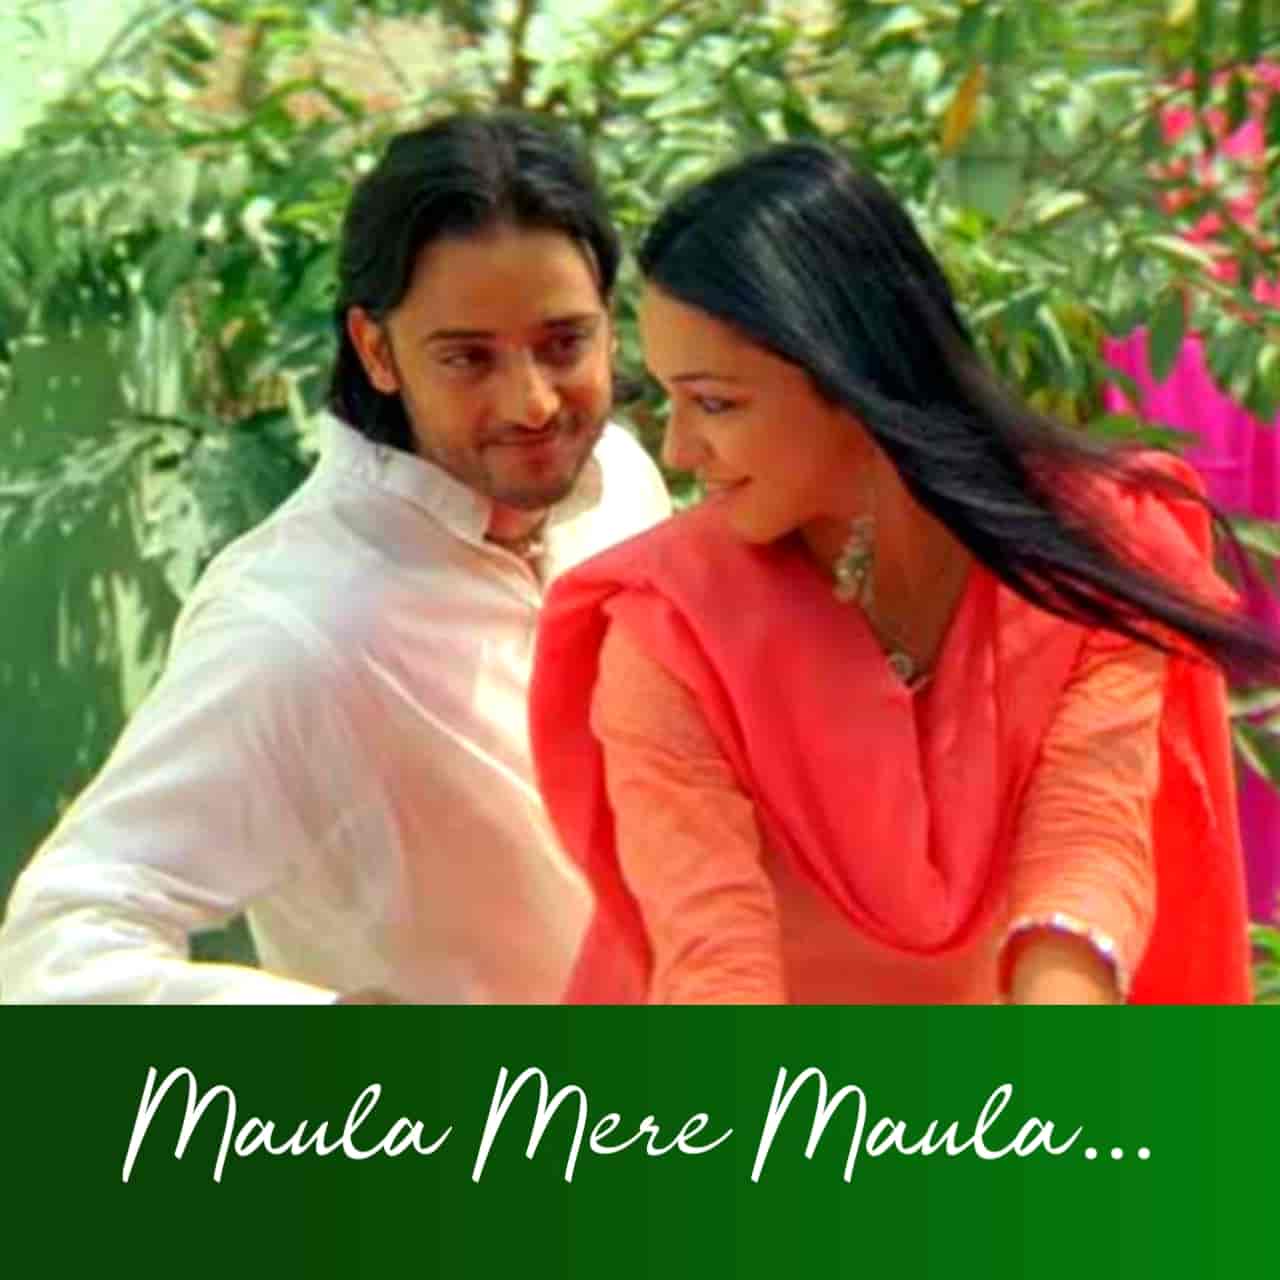 Maula Mere Maula Hindi Love Song Lyrics, Sung By Roop Kumar Rathod.